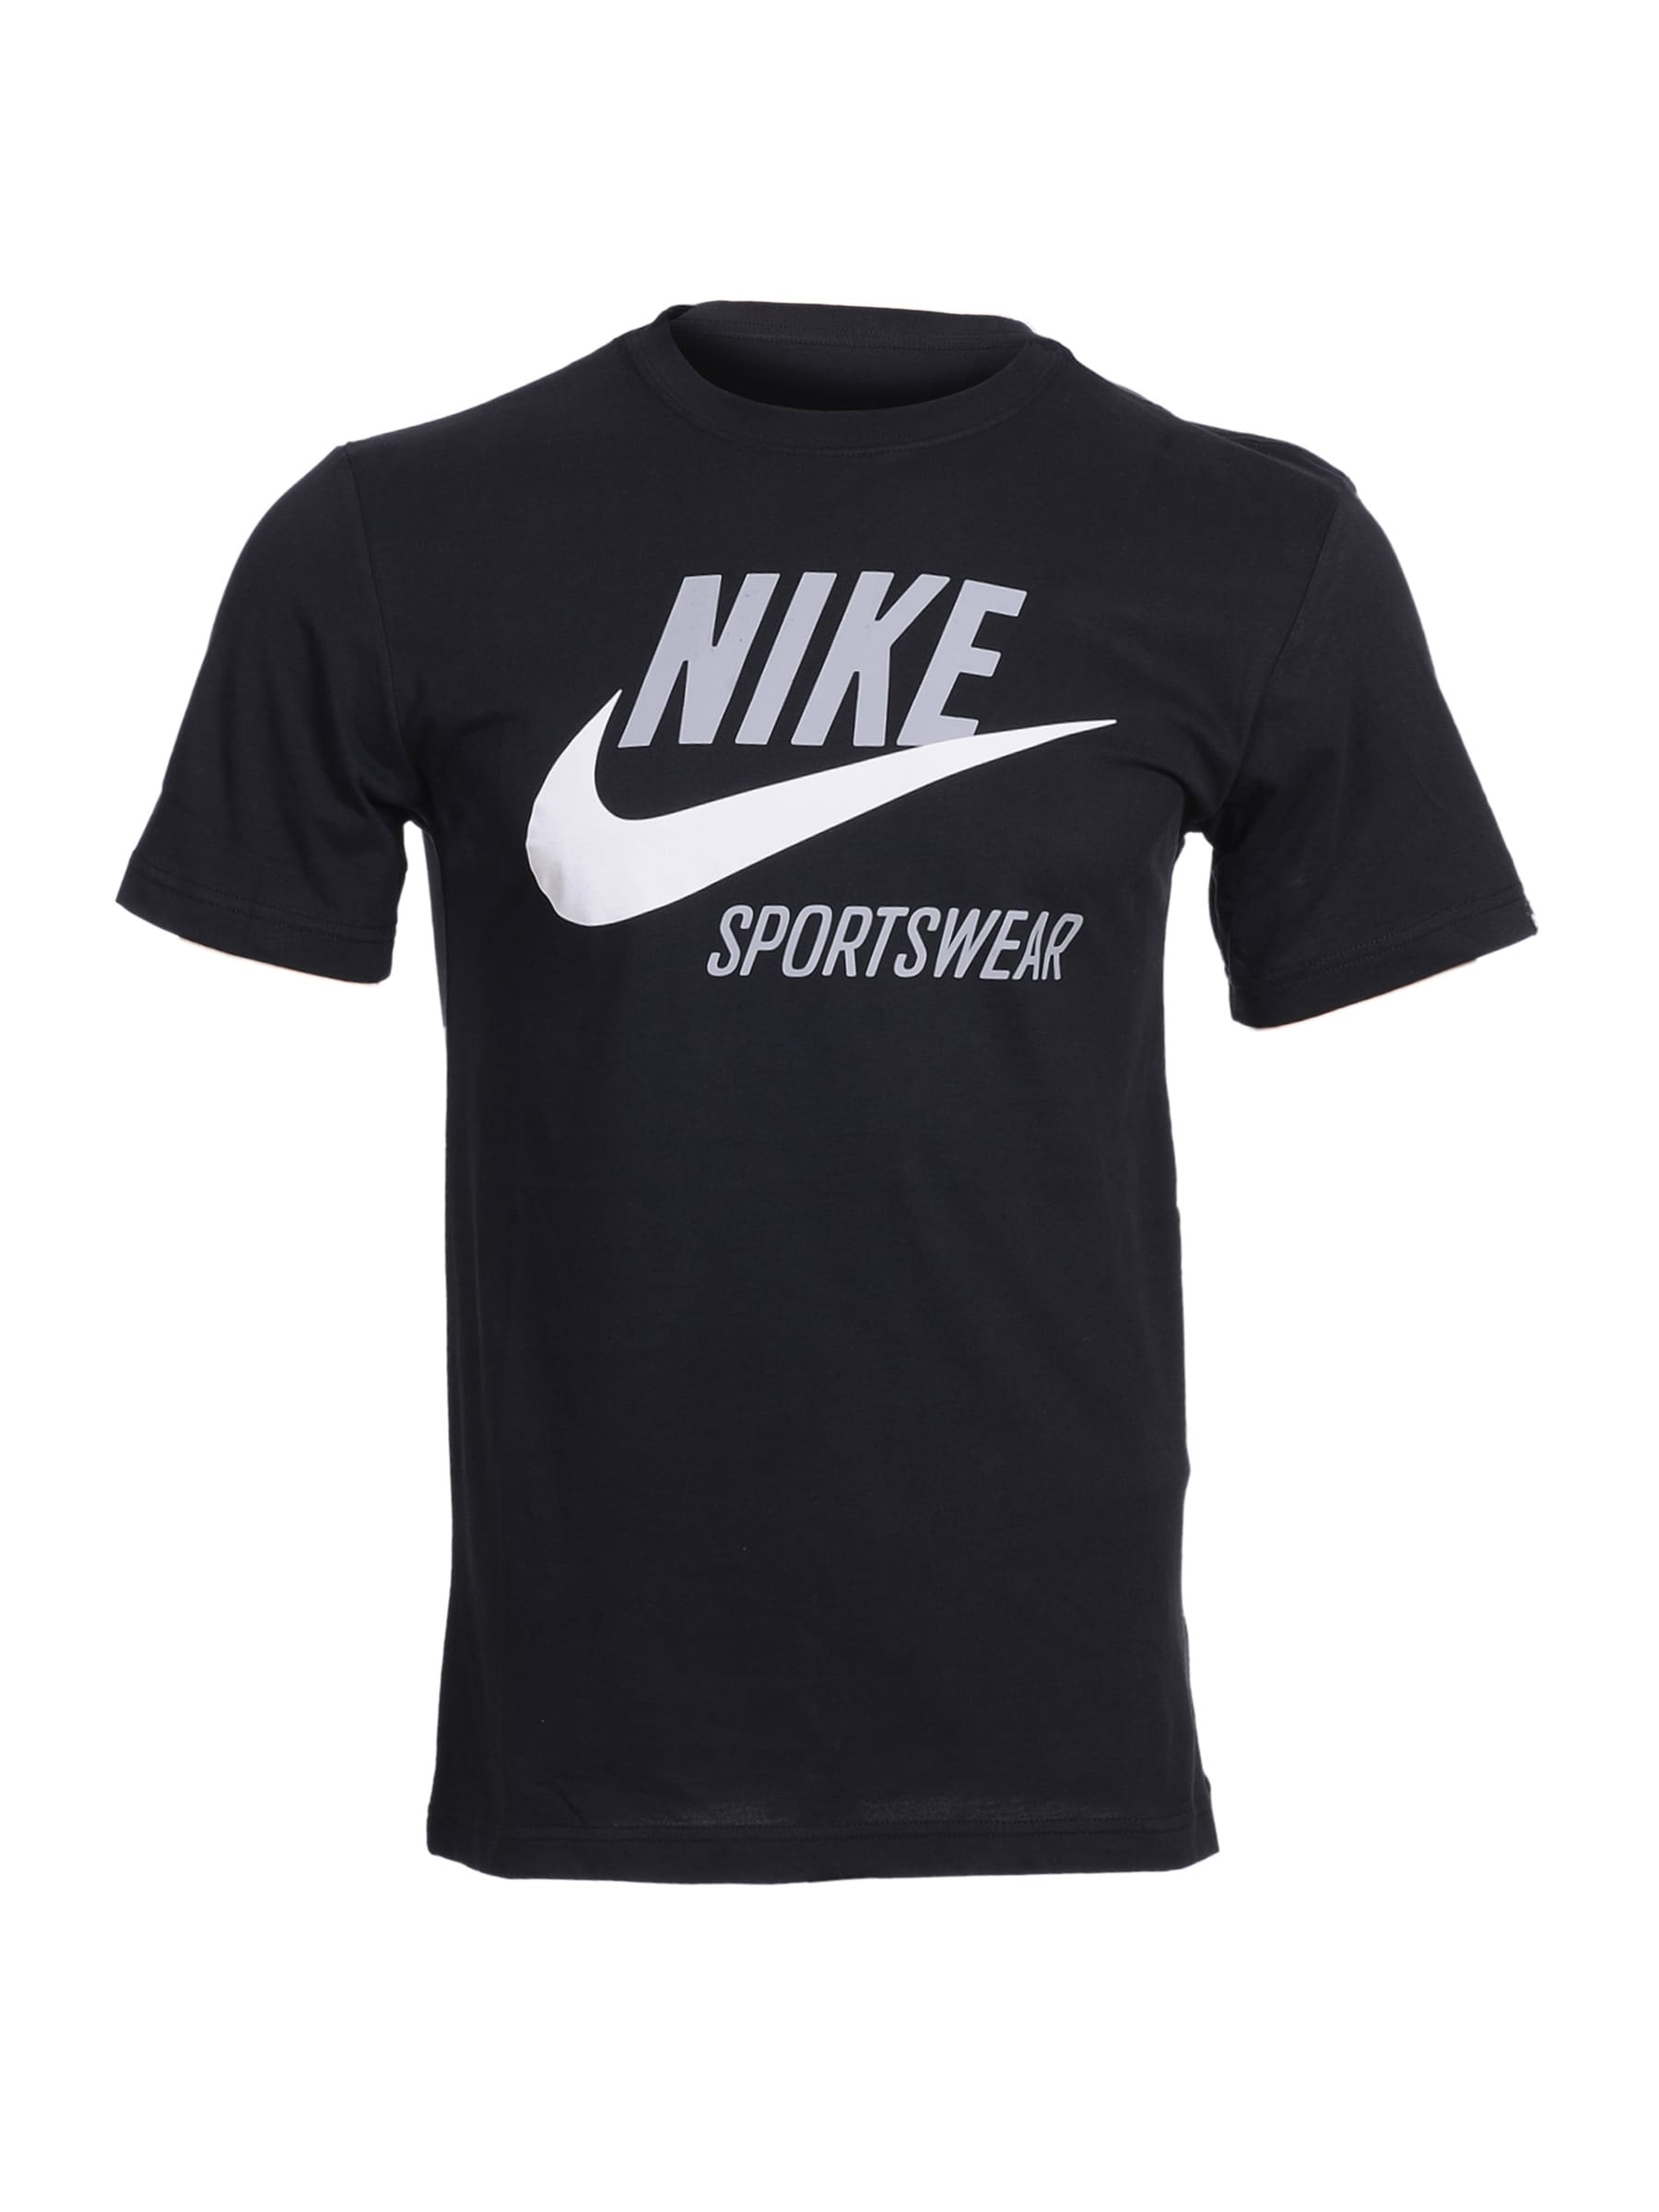 Nike Mens Classic Black T-shirt